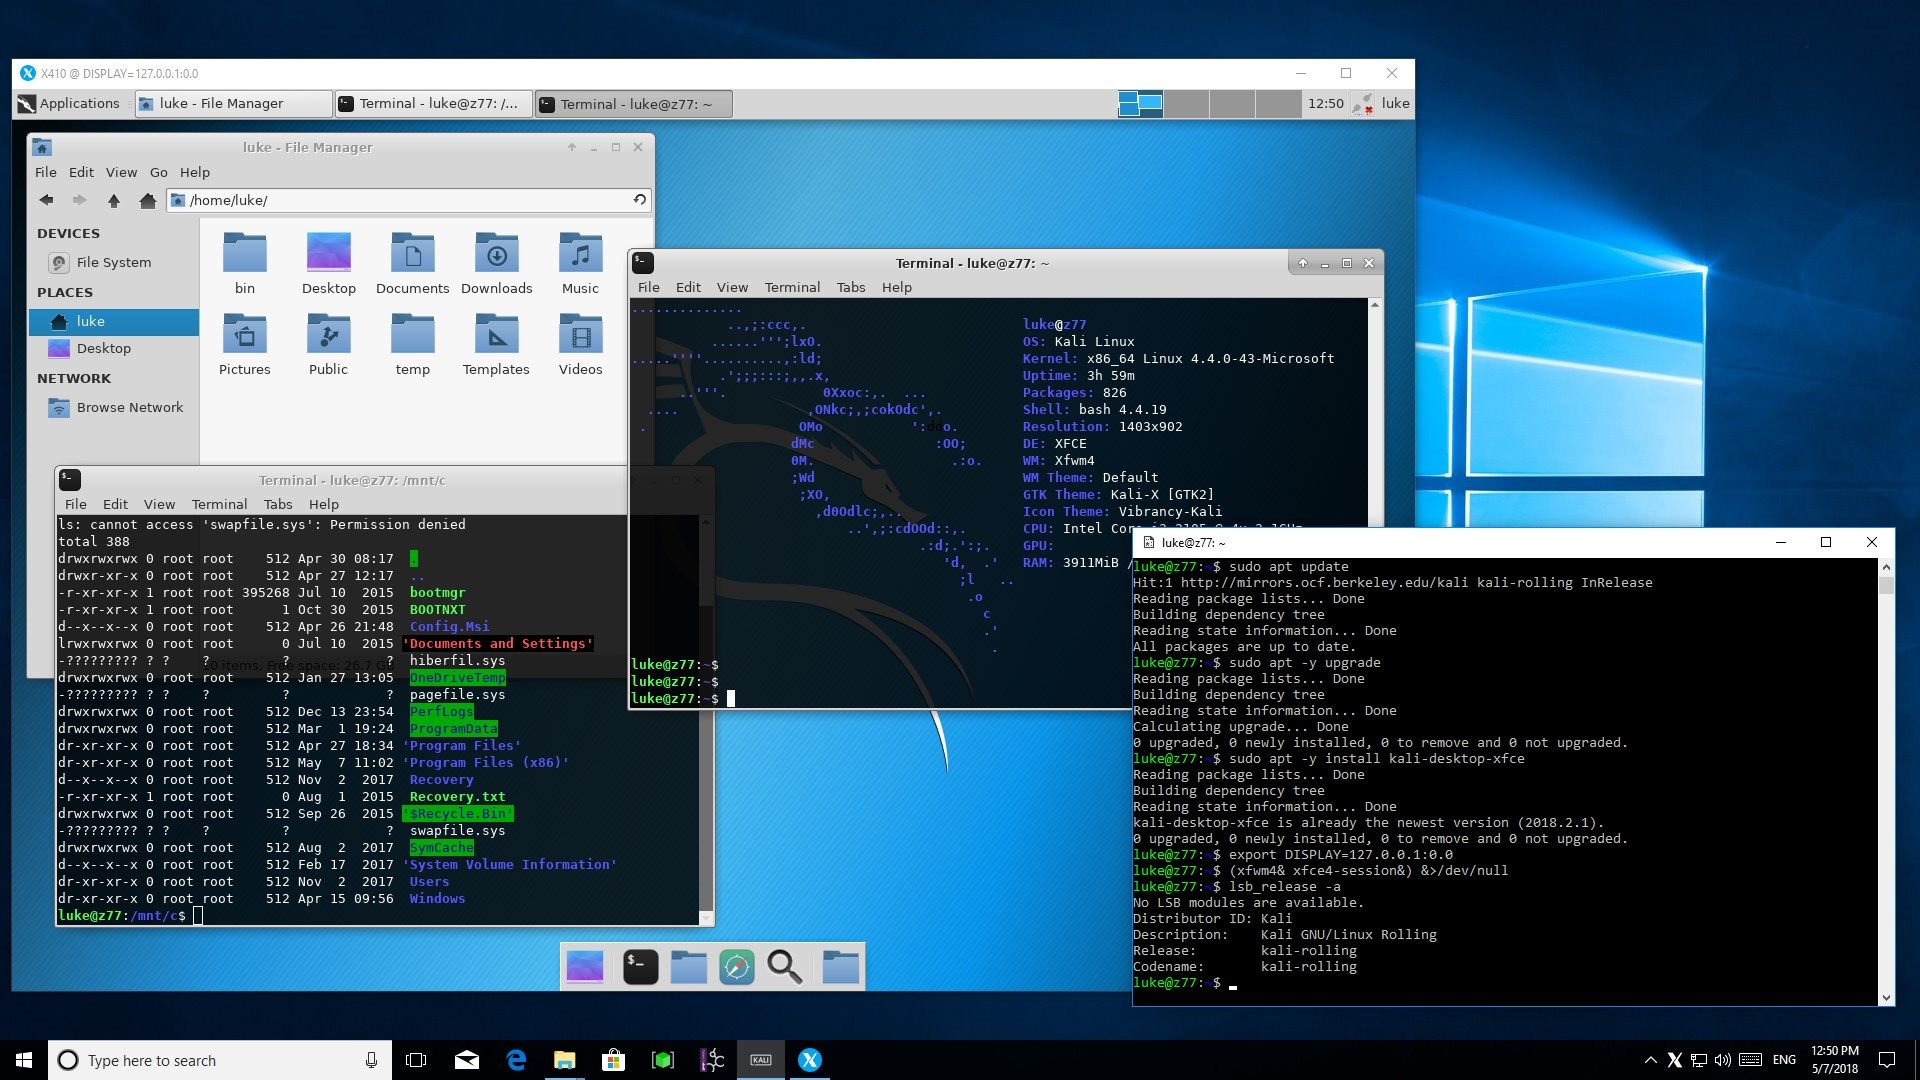 Kali Linux Xfce4 desktop on X410